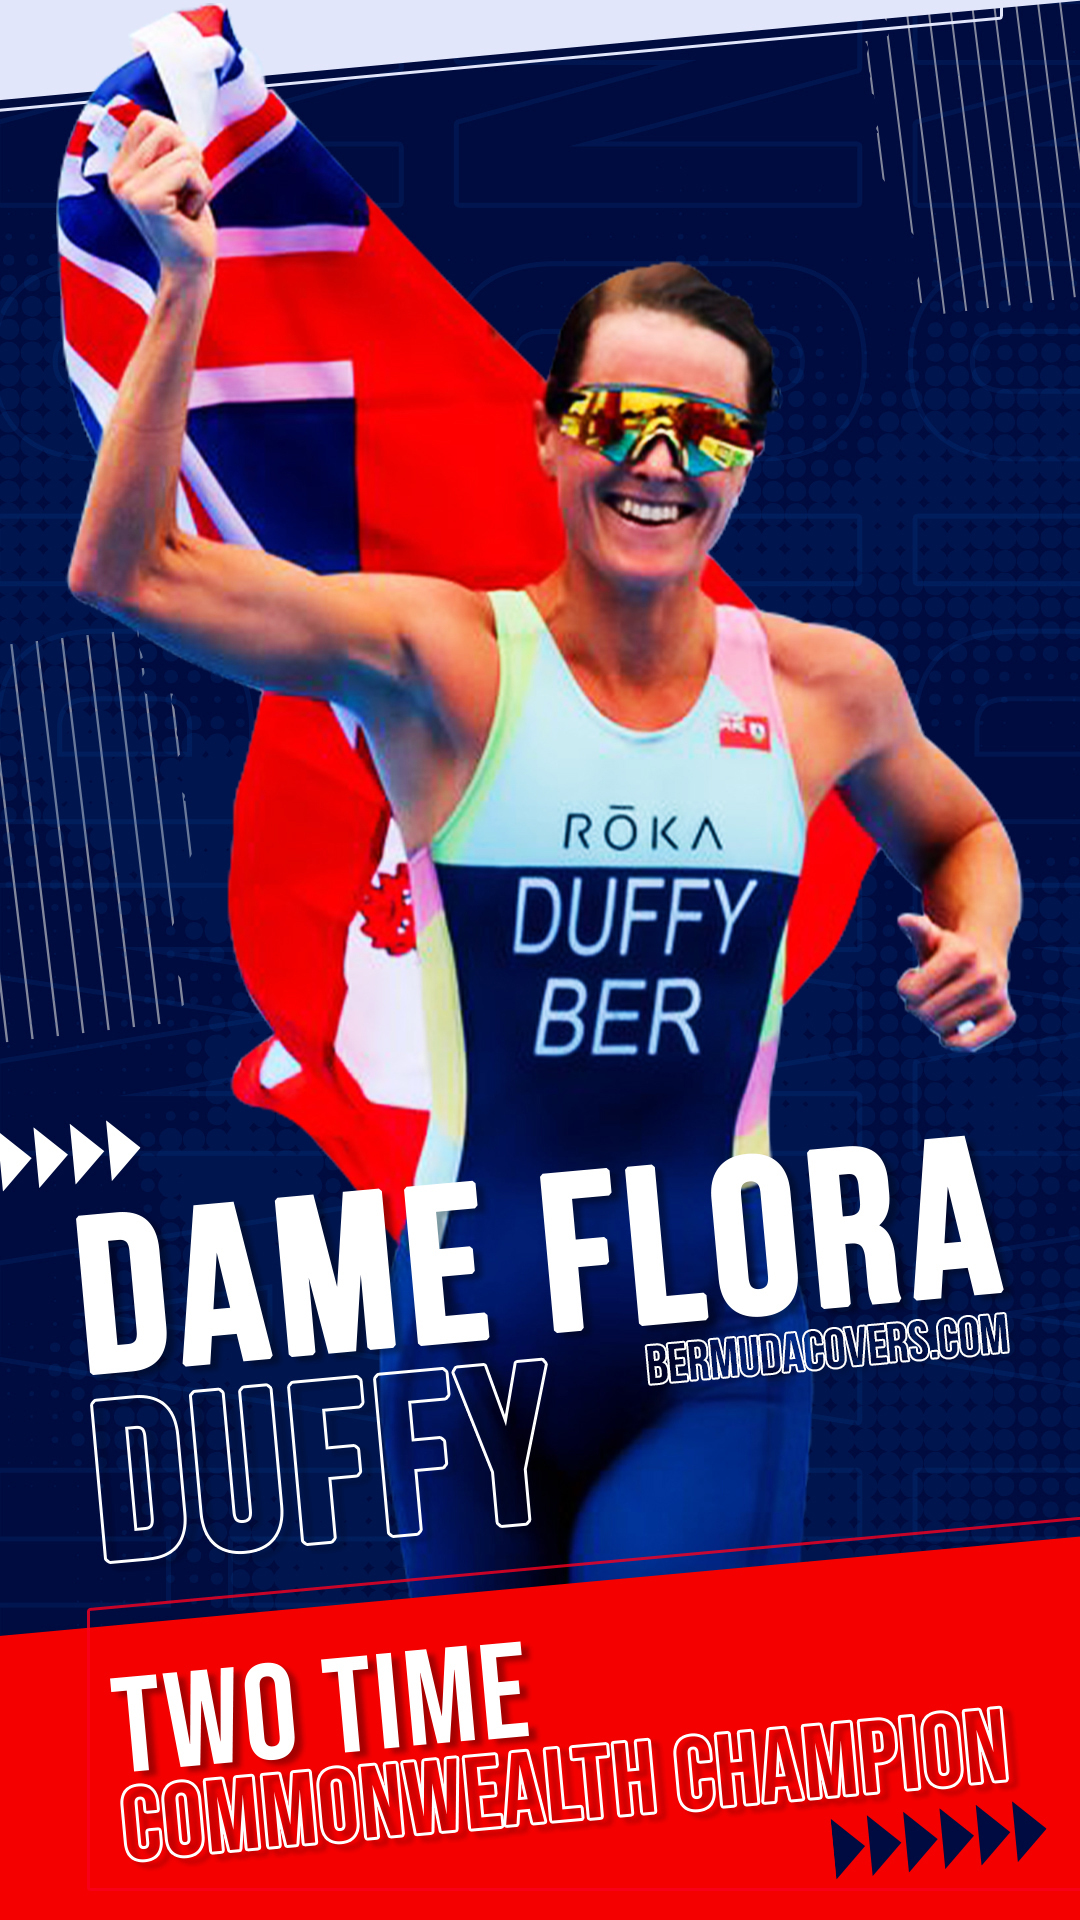 Dame Flora Duffy Two Time Commonwealth Champion Bermuda design image phone screensaver wallpaper lock screen 03394 (2)